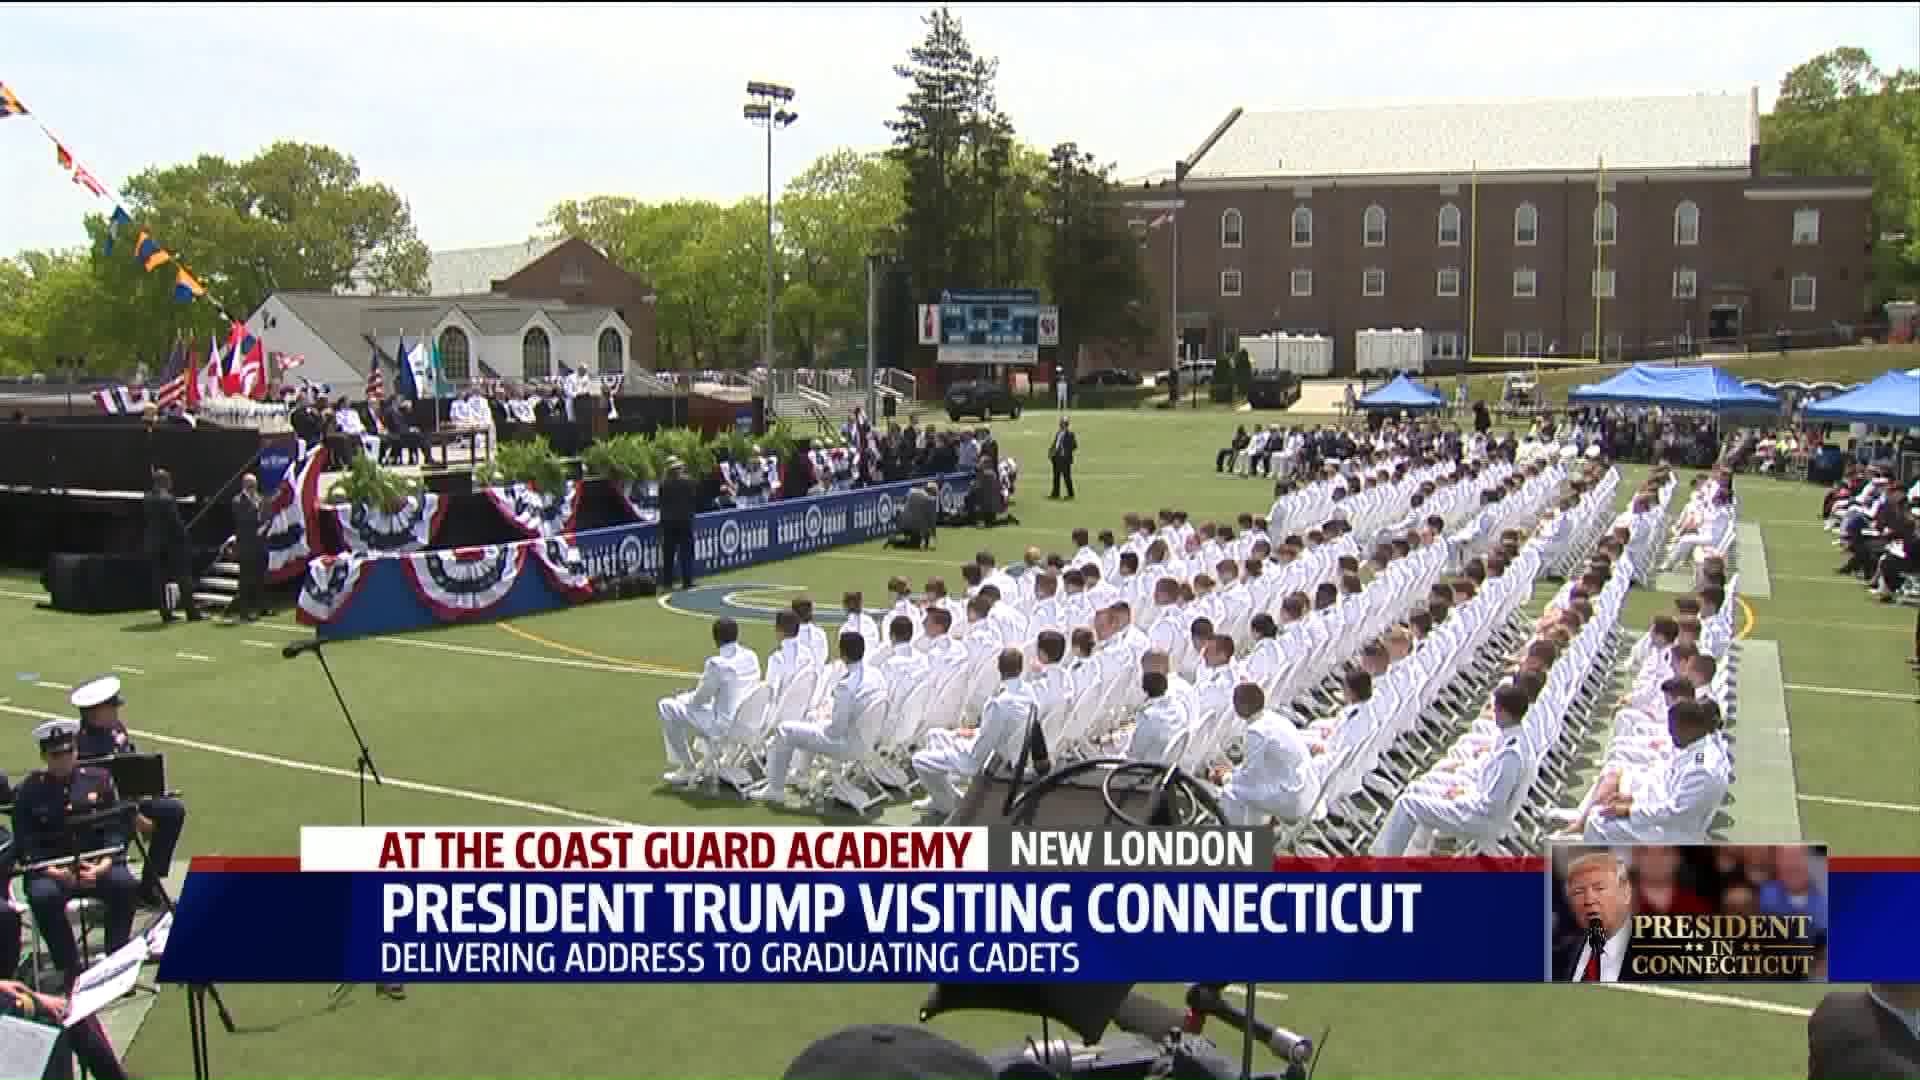 Why the Coast Guard Academy?